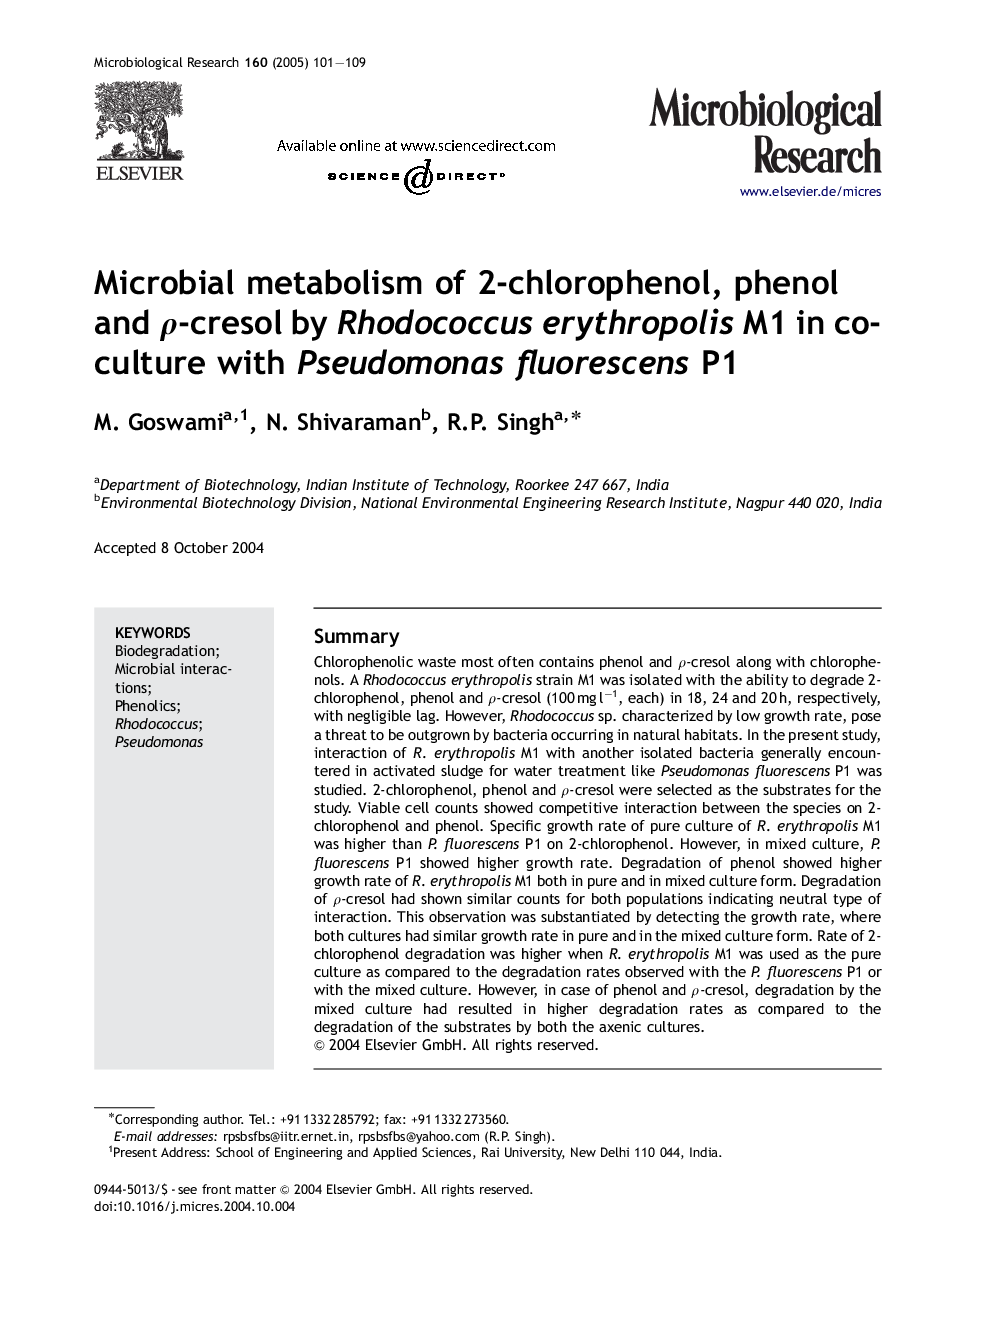 Microbial metabolism of 2-chlorophenol, phenol and Ï-cresol by Rhodococcus erythropolis M1 in co-culture with Pseudomonas fluorescens P1